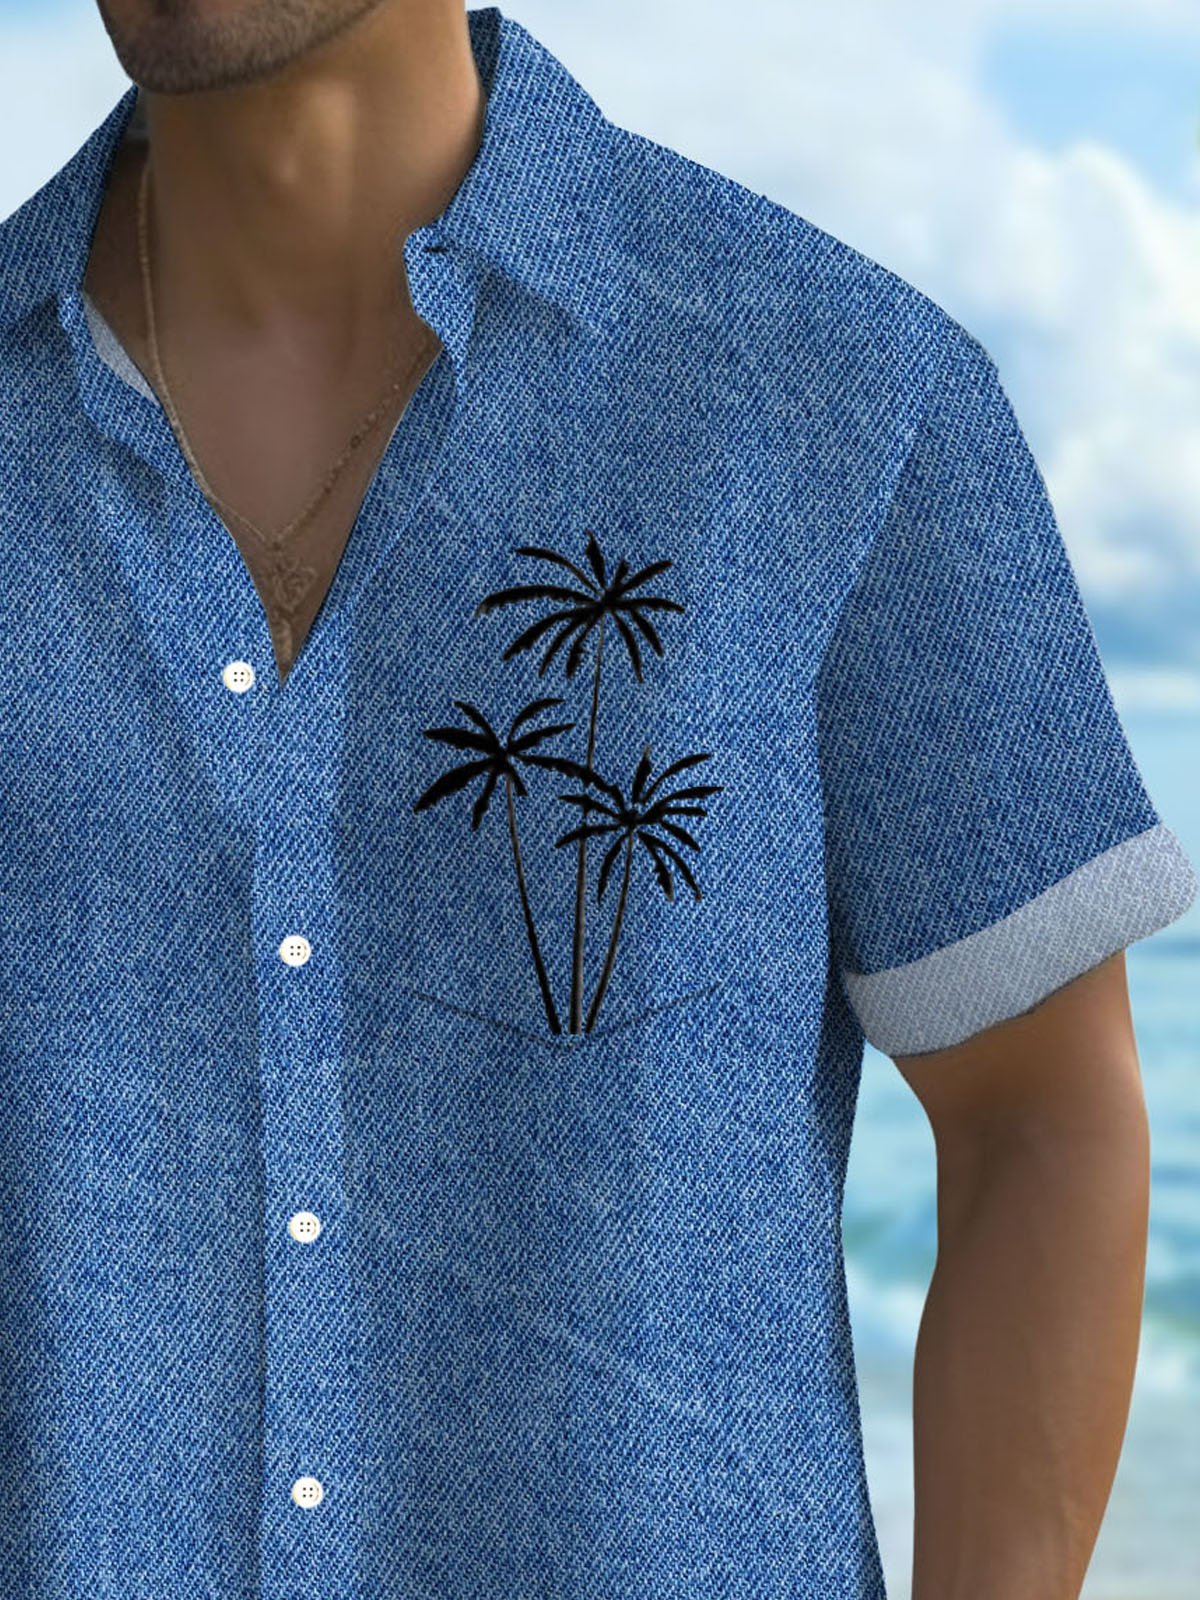 Royaura®Denim Textured Coconut Tree Print Men's Button Pocket Short Sleeve Shirt